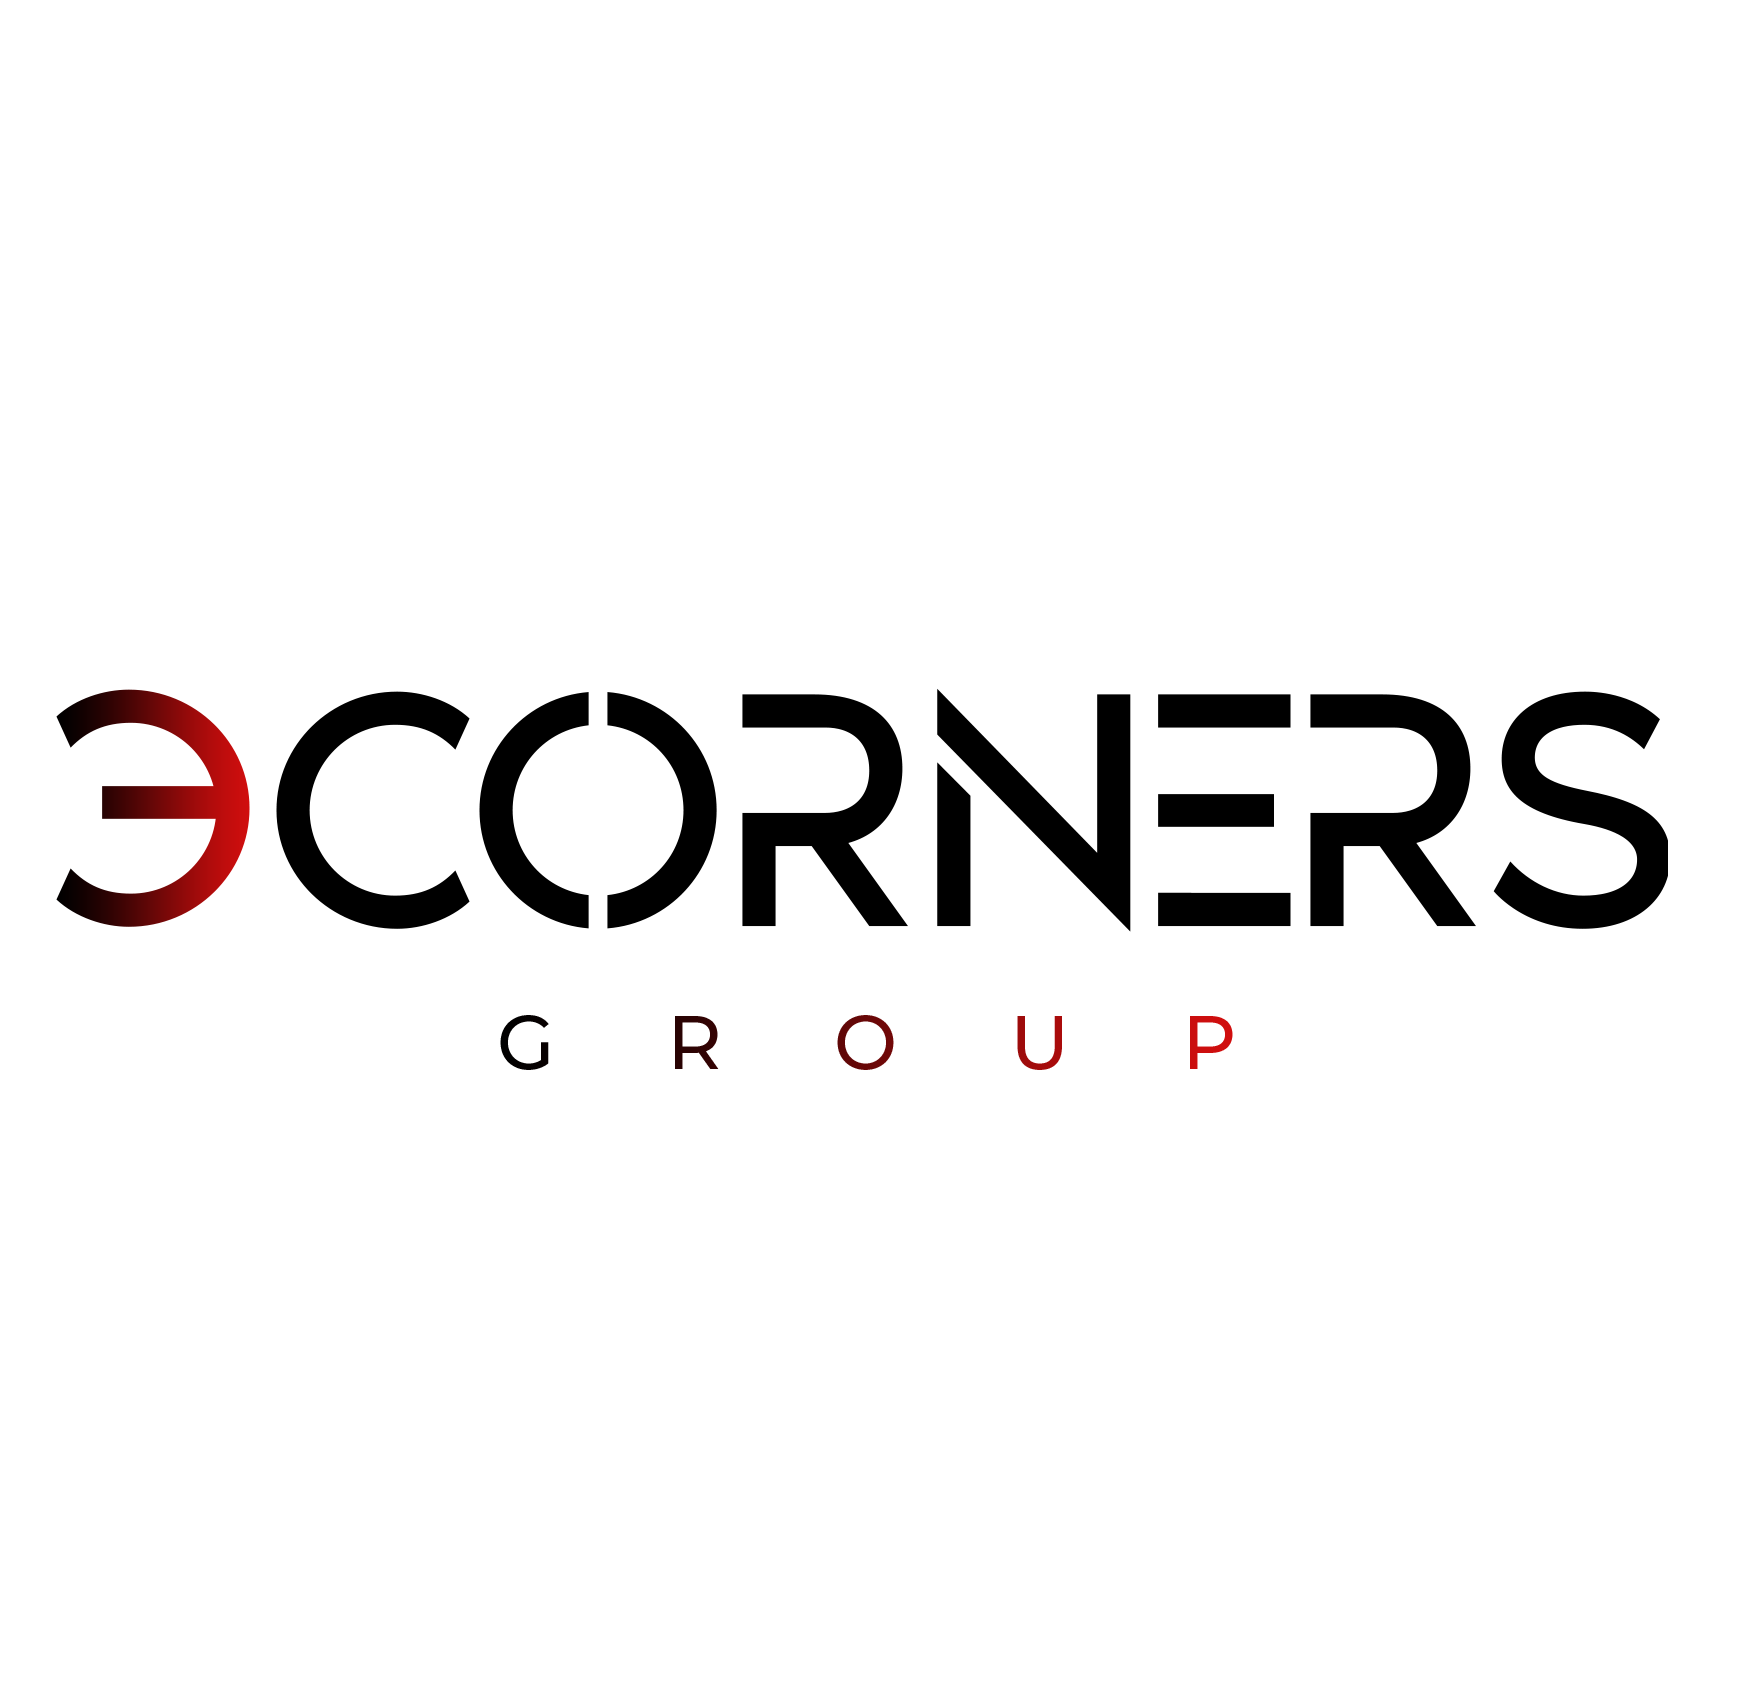 Three Corners Group